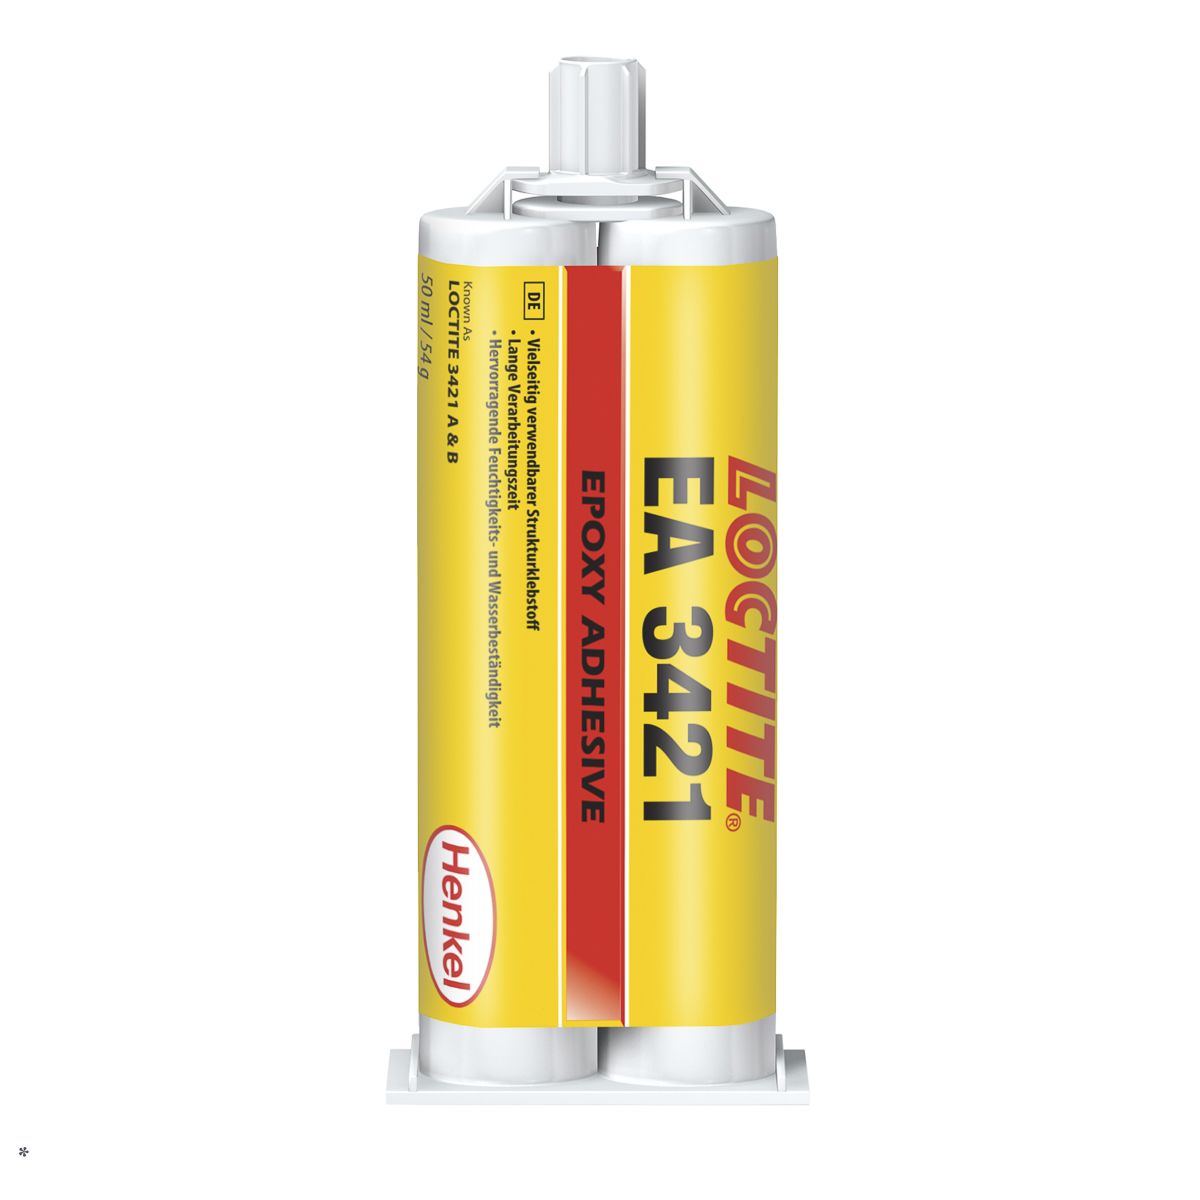 Loctite Loctite HYSOL 3421 Transparent Yellow 50 ml Epoxy Adhesive Dual Cartridge for Ceramic, Metal, Plastic, Wood